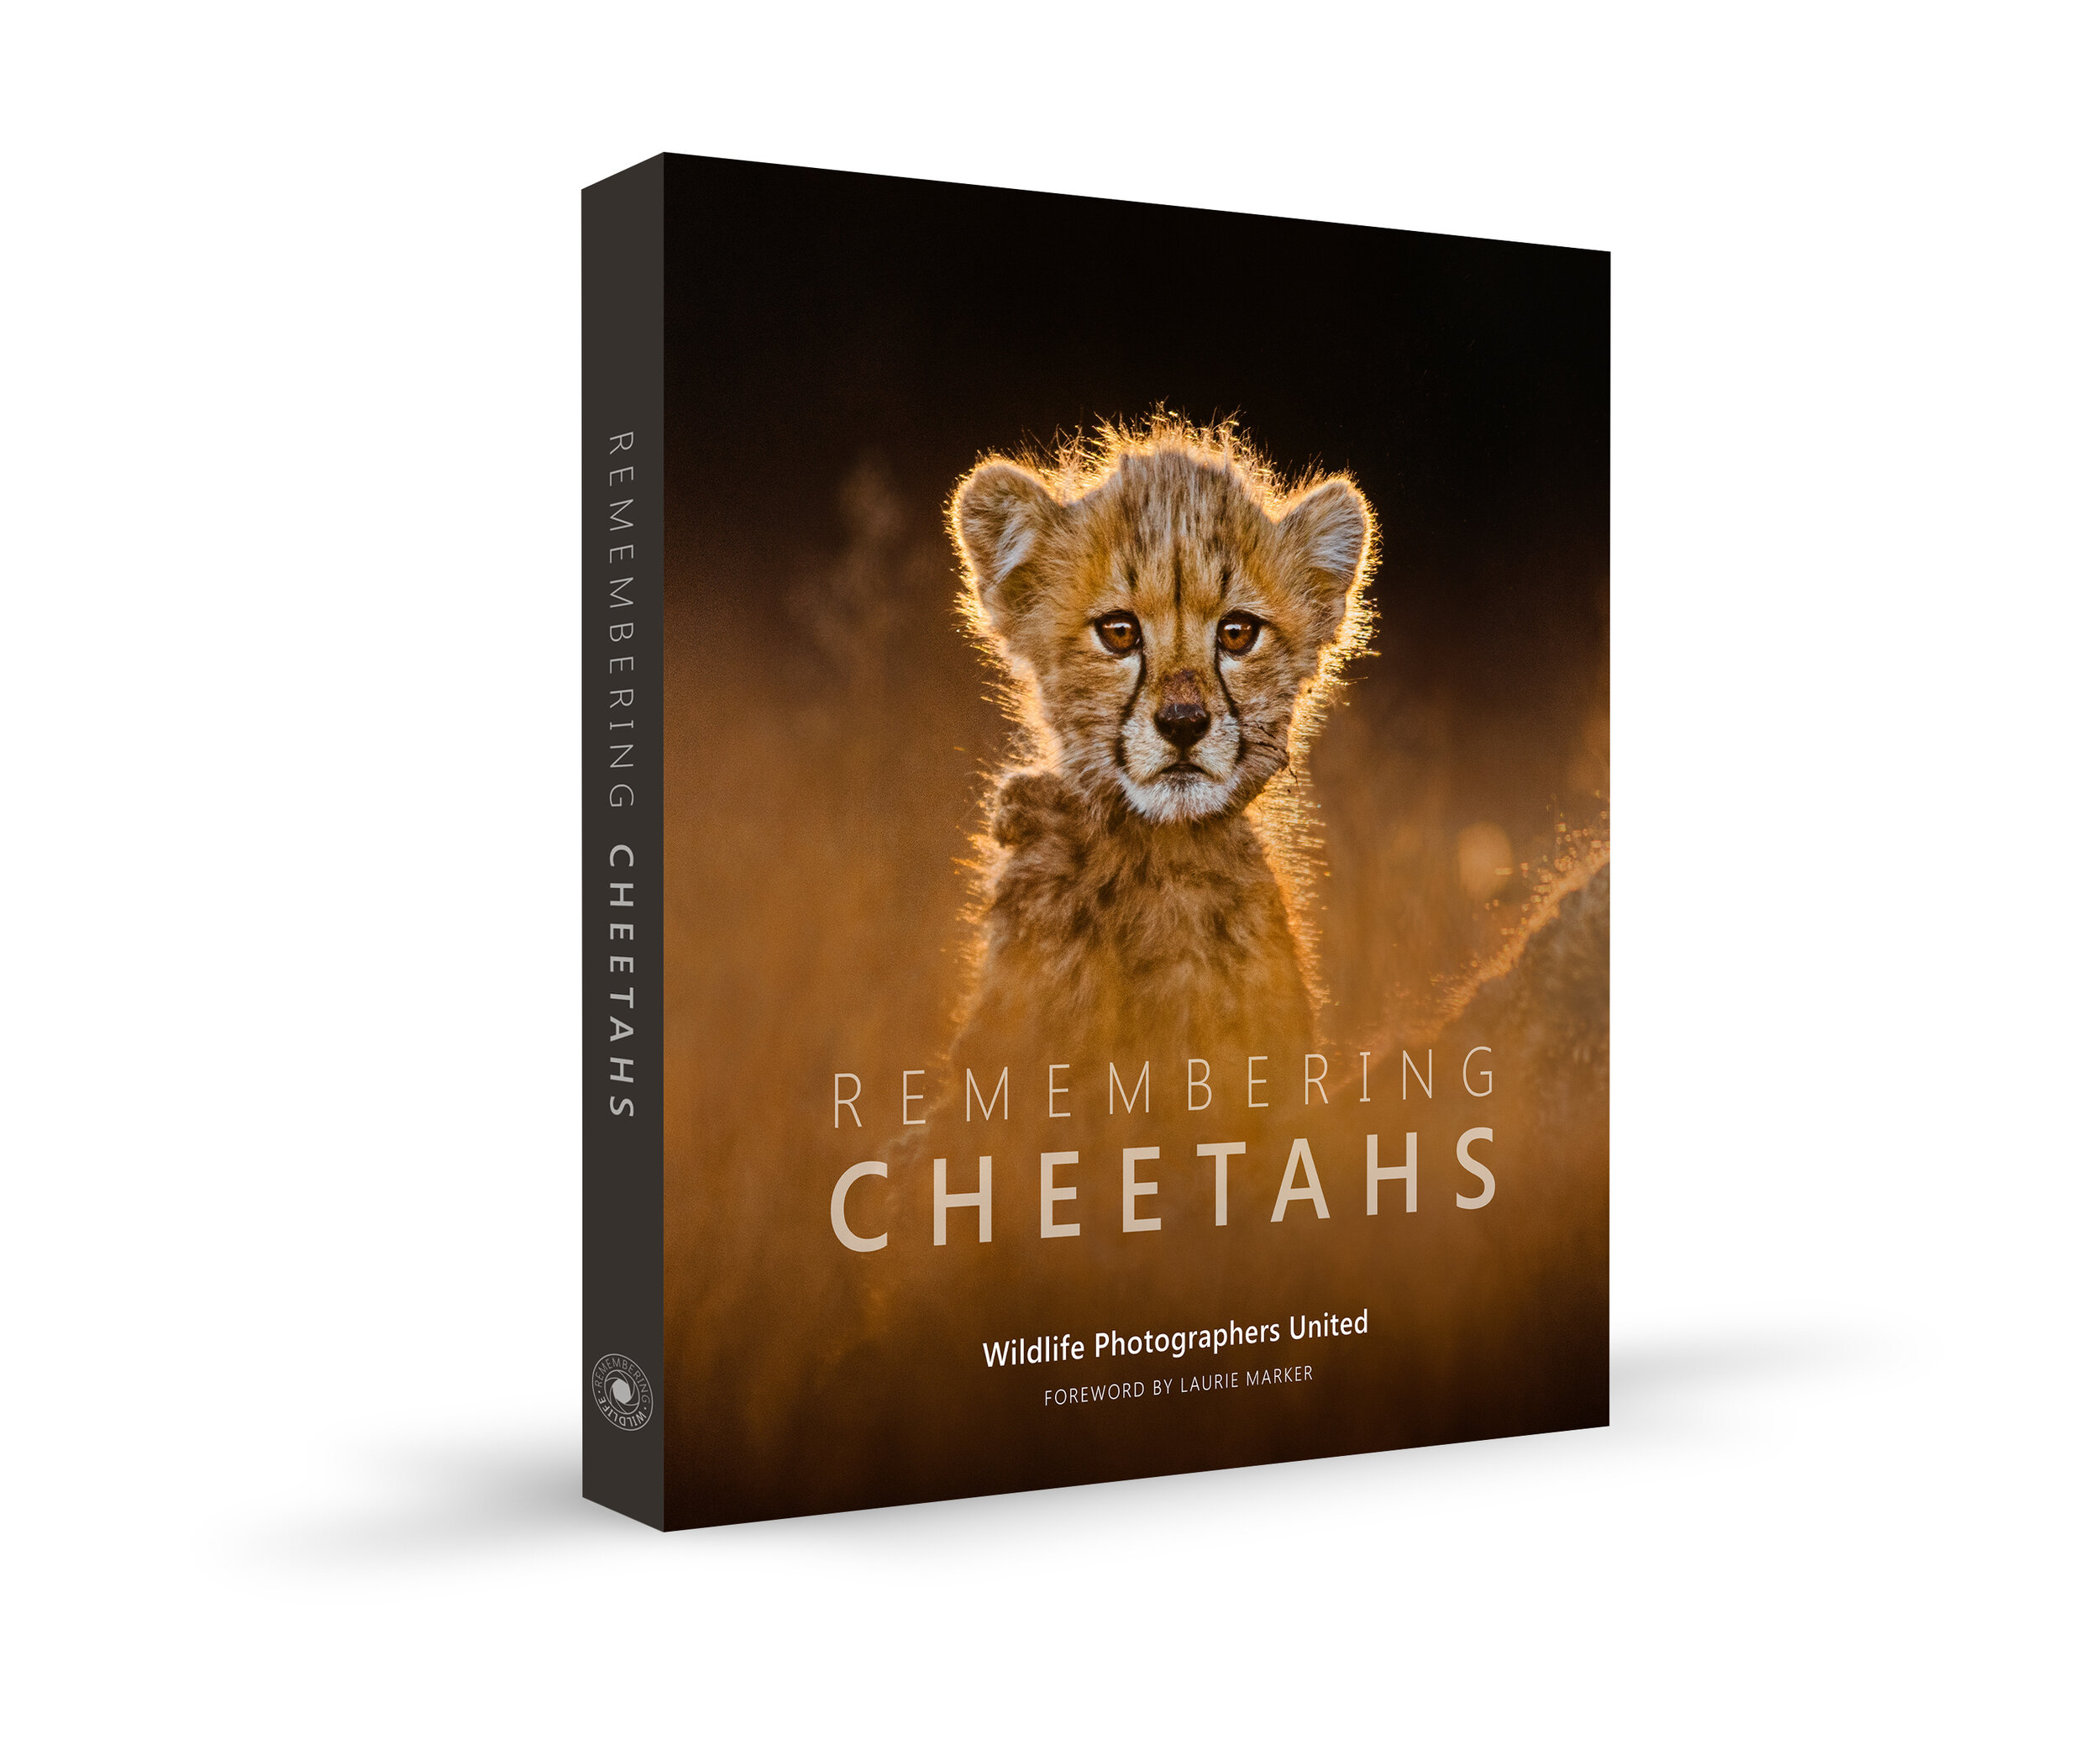 Raggett’s book, Remembering Cheetahs